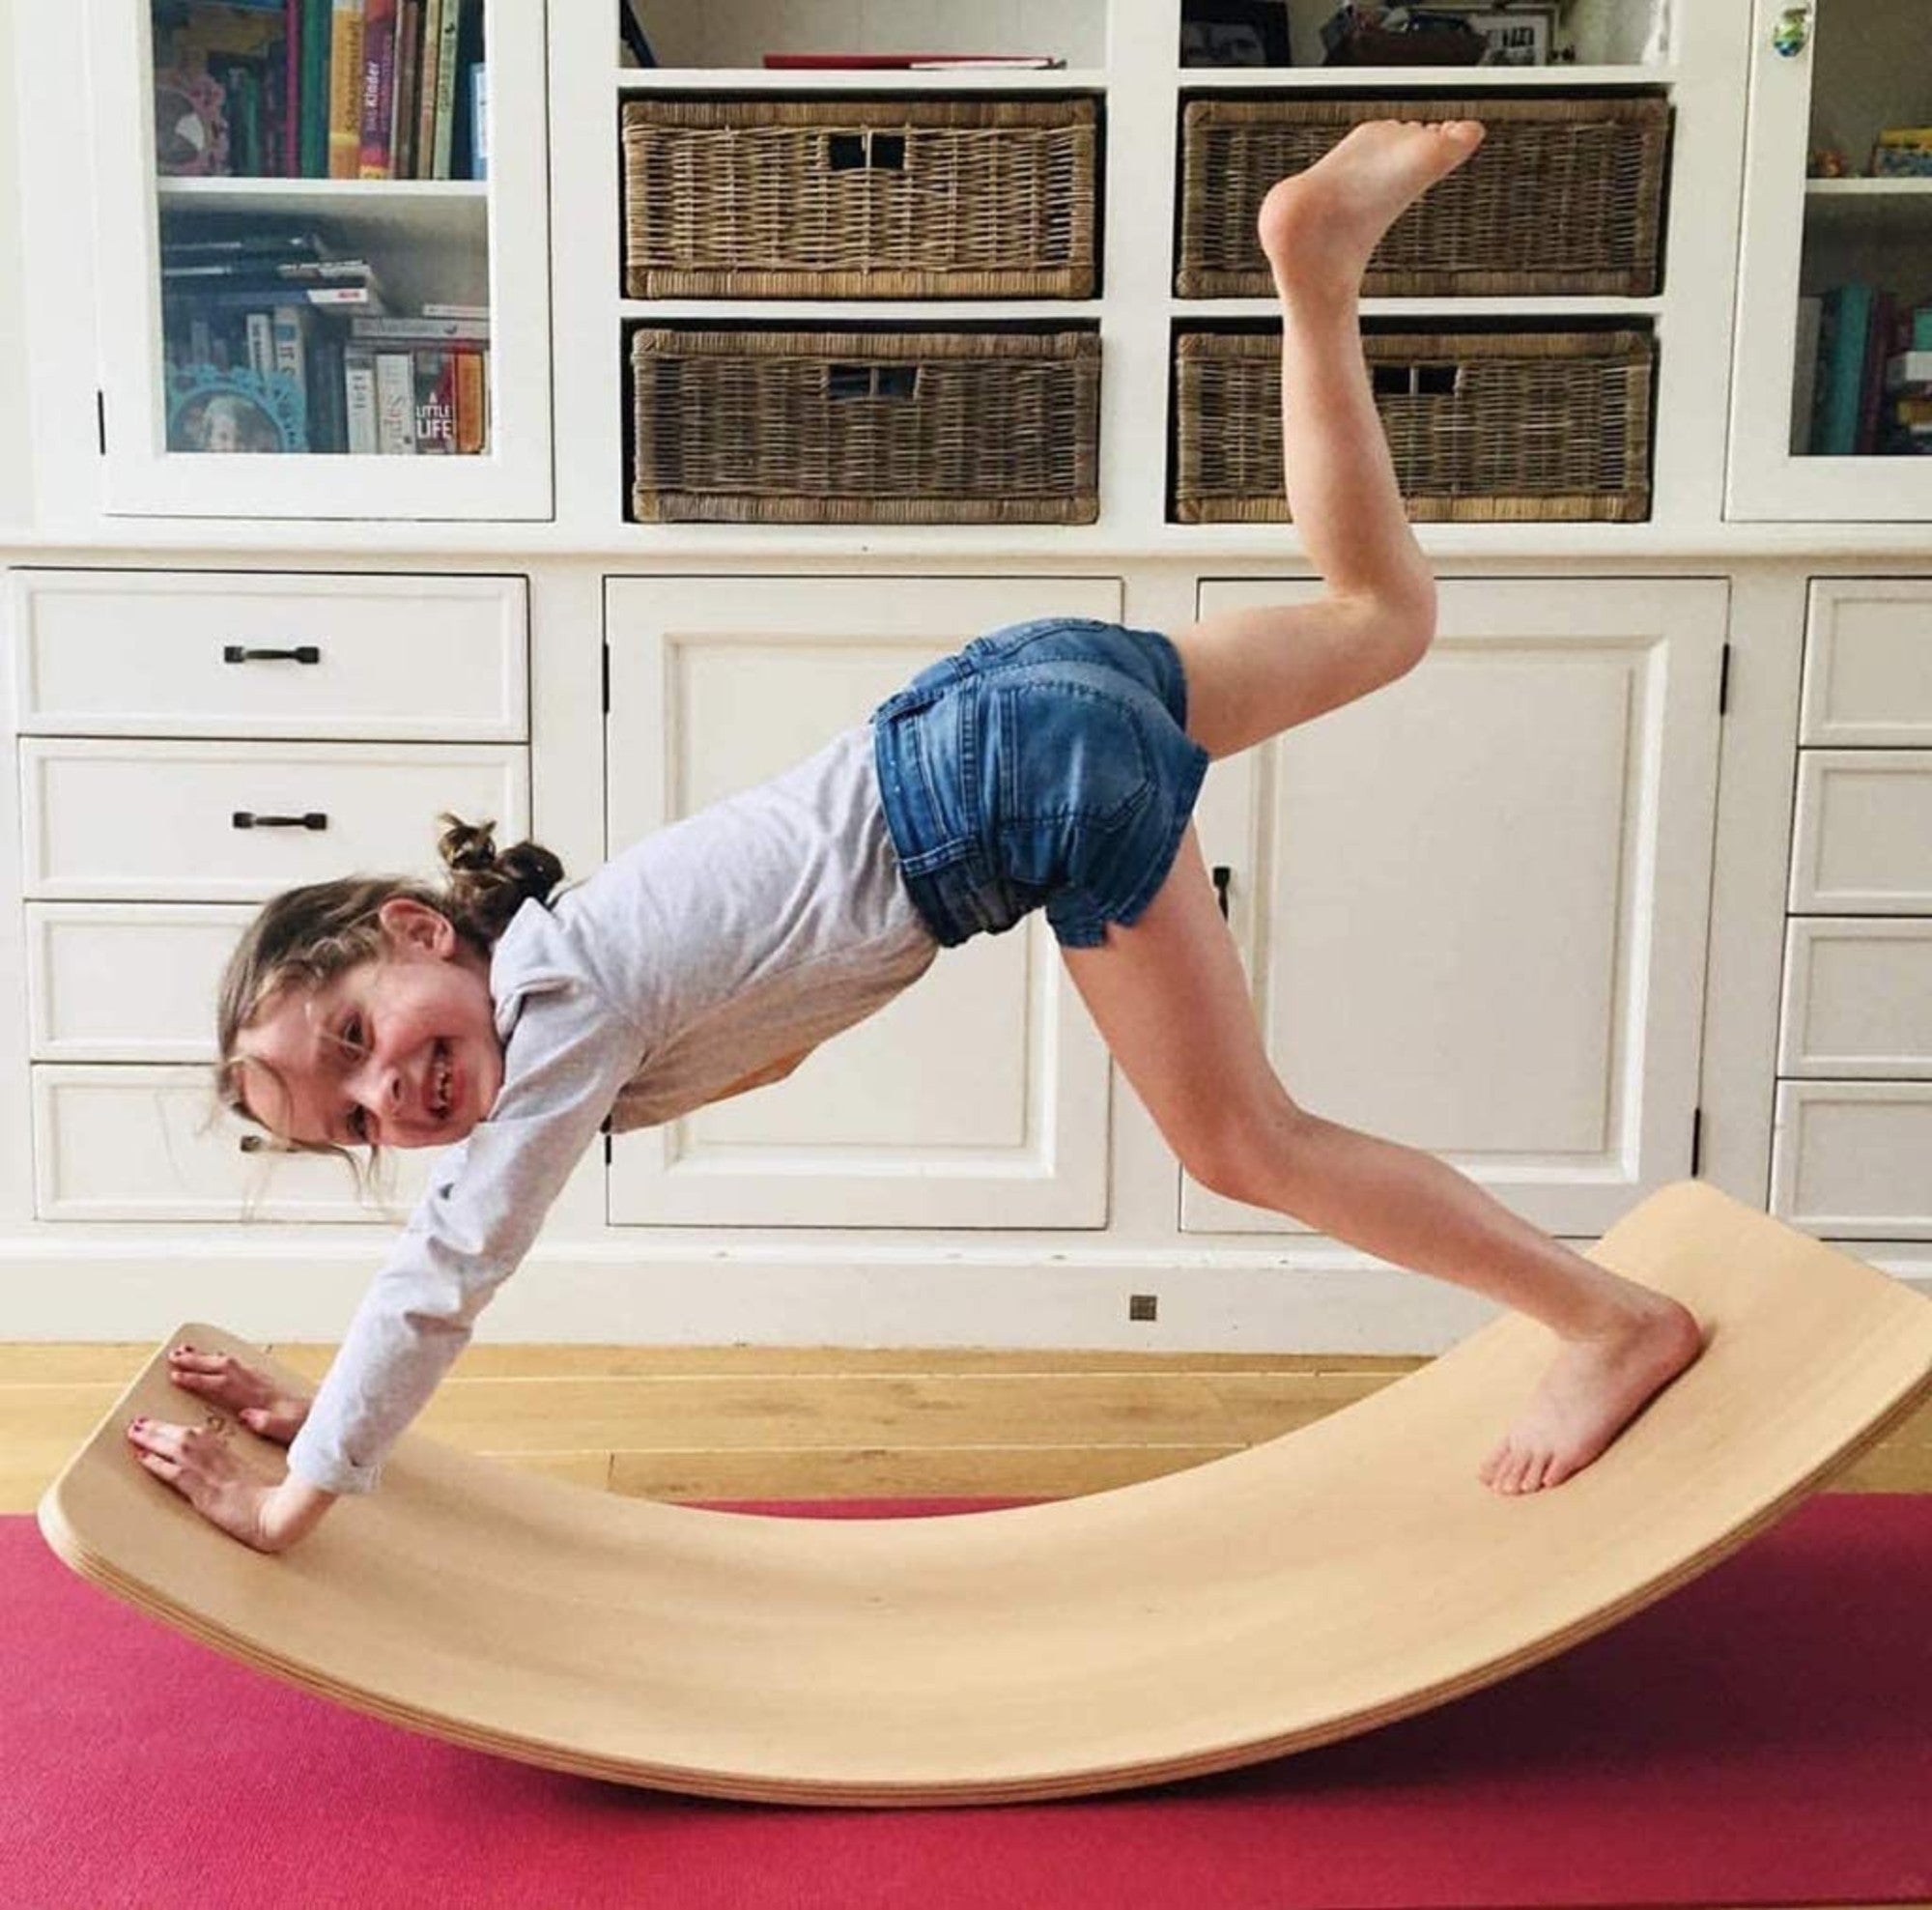 Balance Board for Kids play, Yoga, Pilates, strength training kids and adult sizes natural handmade European Beech wood